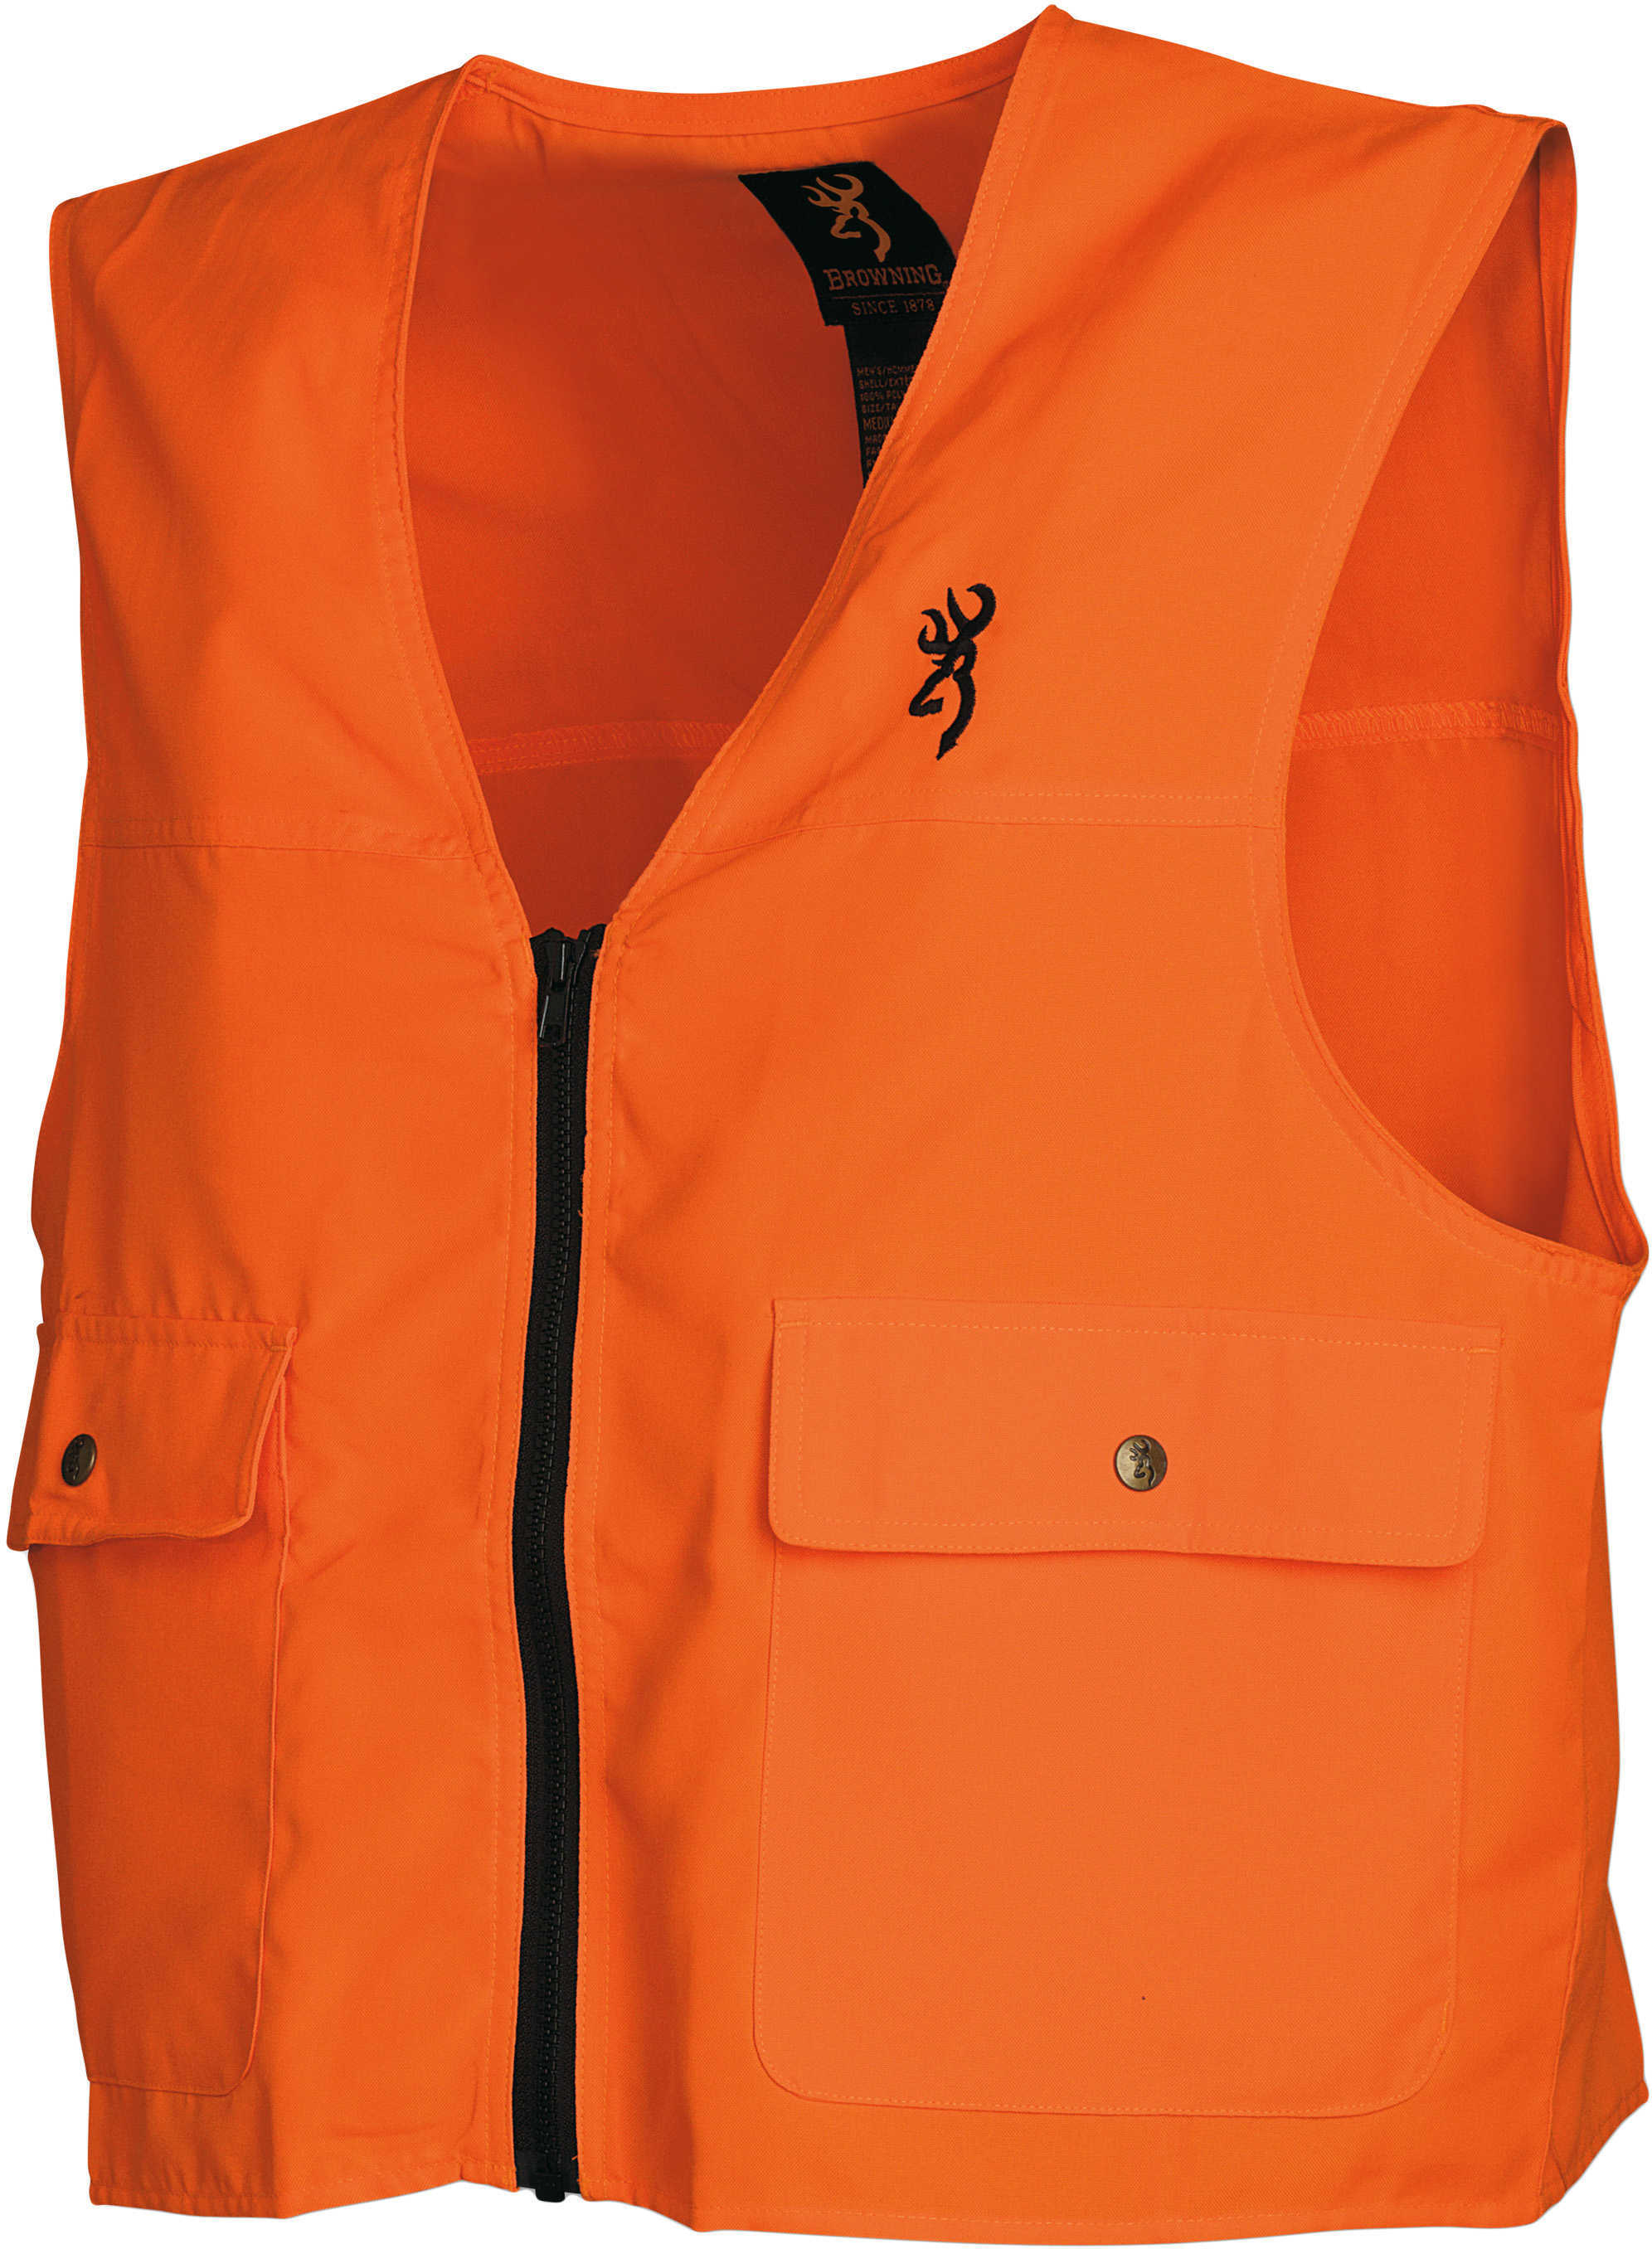 BG Safety Vest Buck Mark Logo Blaze Orange Large